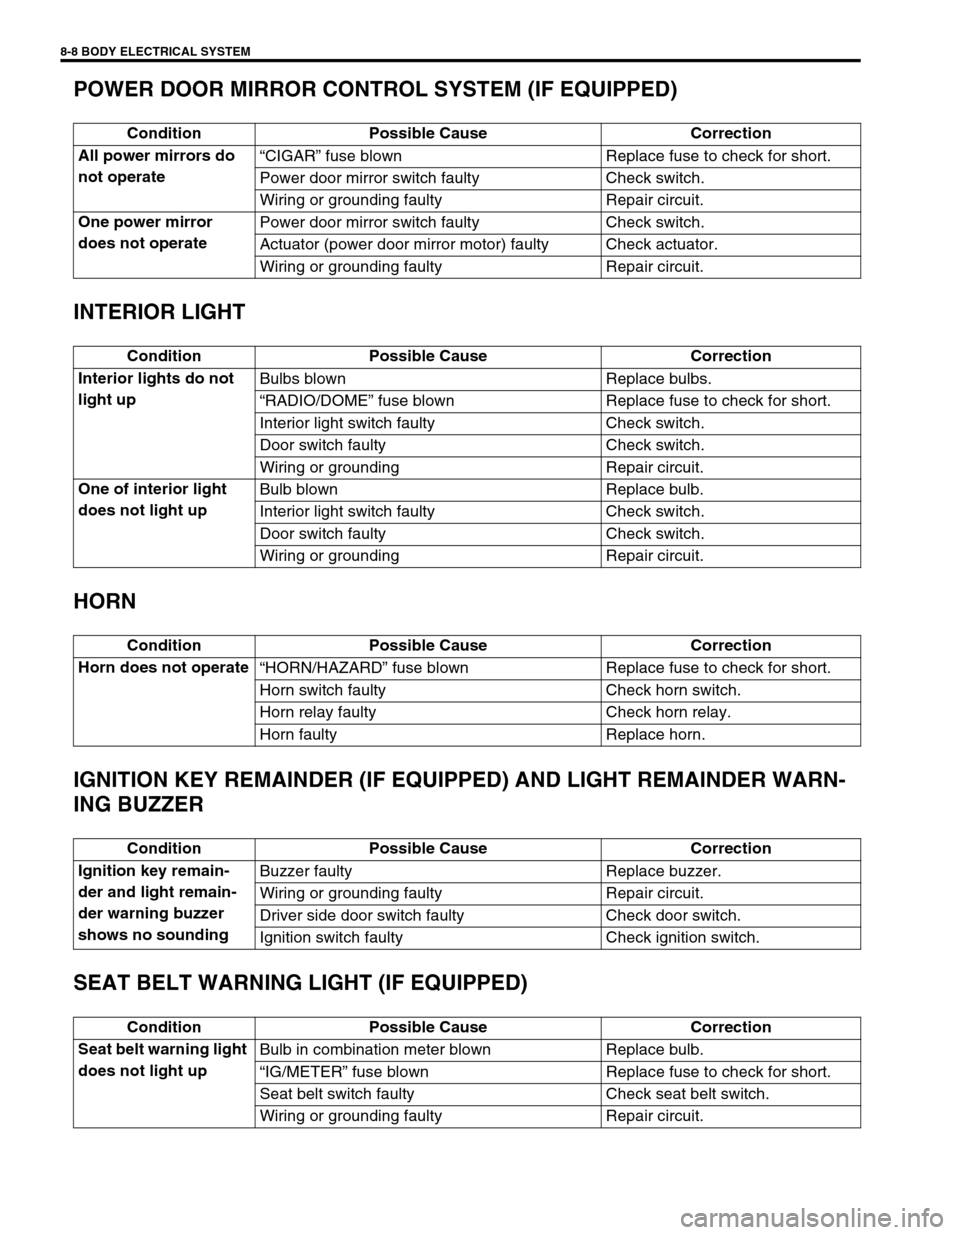 SUZUKI SWIFT 2000 1.G Transmission Service Workshop Manual 8-8 BODY ELECTRICAL SYSTEM
POWER DOOR MIRROR CONTROL SYSTEM (IF EQUIPPED)
INTERIOR LIGHT
HORN
IGNITION KEY REMAINDER (IF EQUIPPED) AND LIGHT REMAINDER WARN-
ING BUZZER
SEAT BELT WARNING LIGHT (IF EQUI